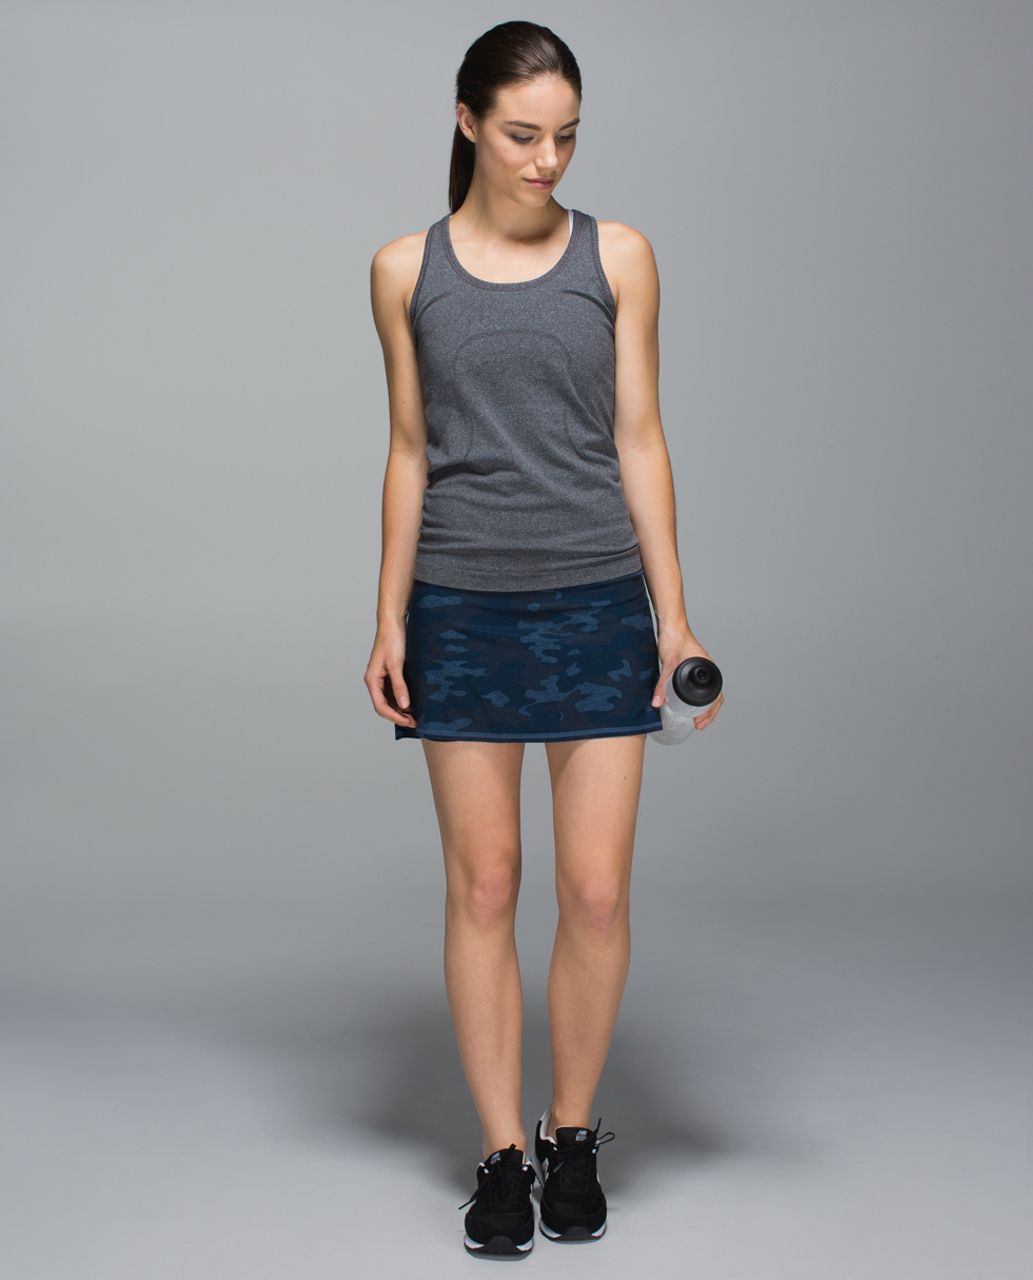 Lululemon Run:  Pace Setter Skirt *4-way Stretch (Regular) - Heathered Texture Lotus Camo Oil Slick Blue / Black